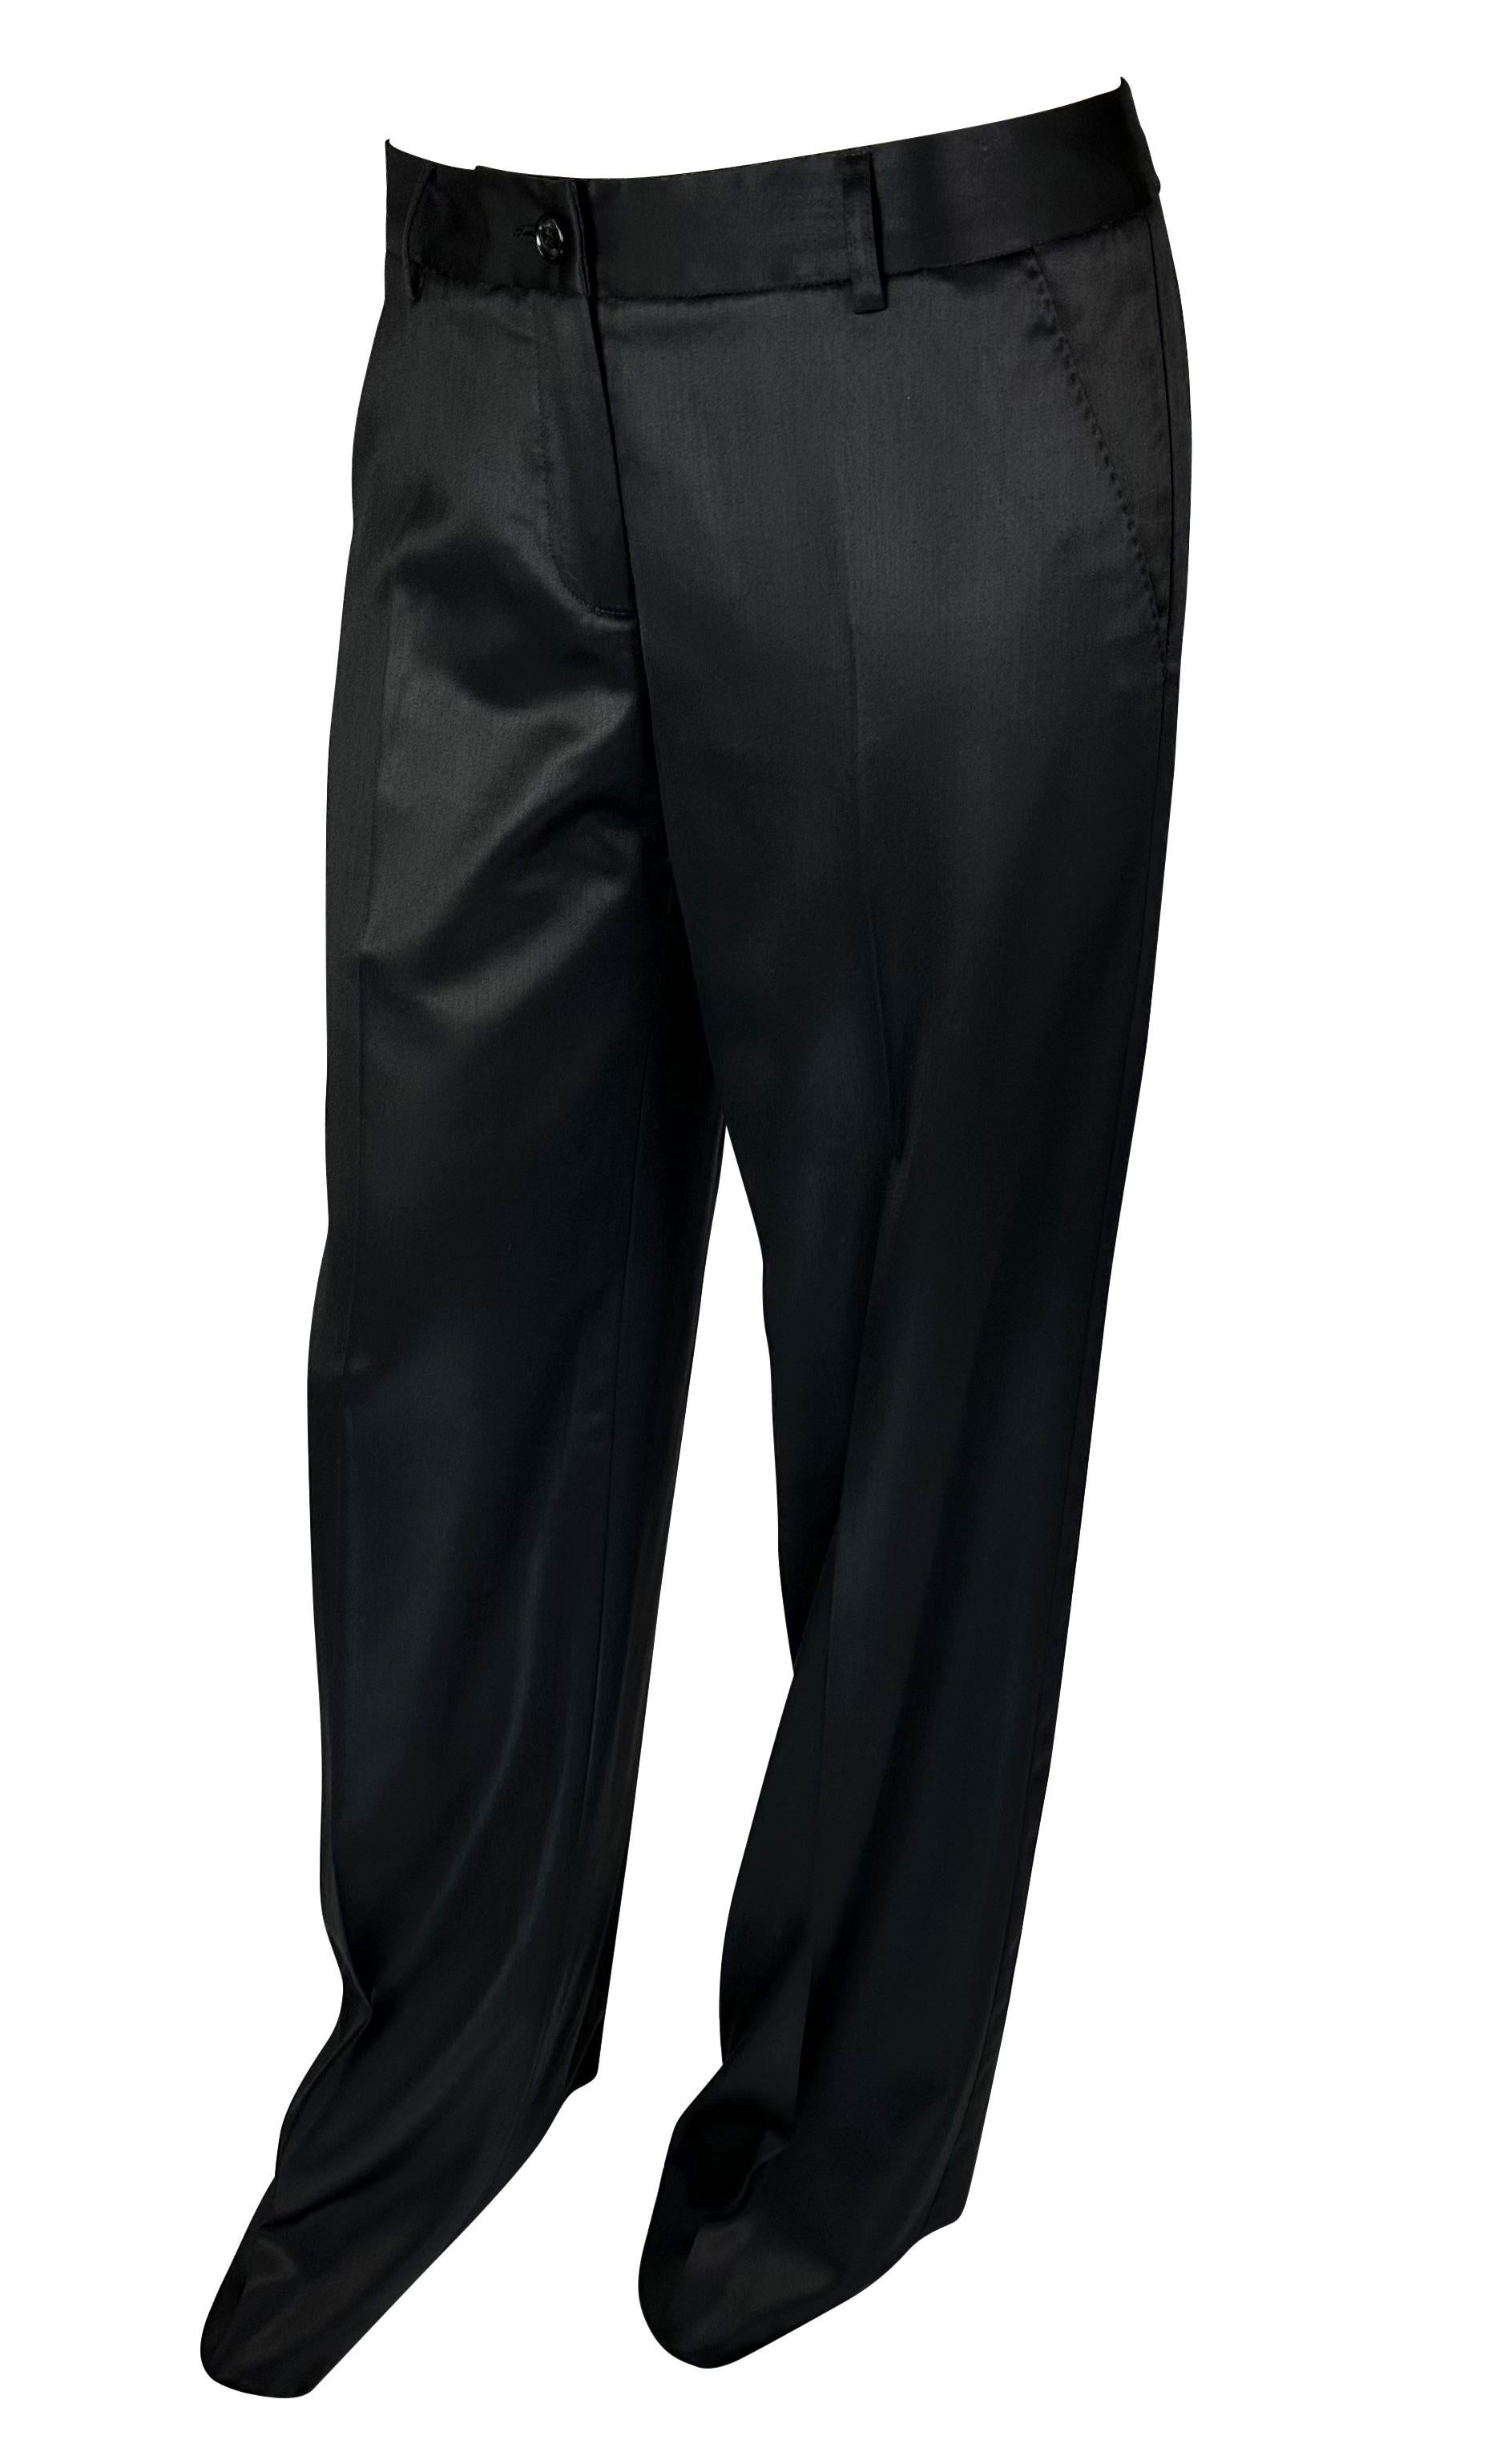 F/W 2004 Roberto Cavalli Corset Boned Lace-Up Black Low-Rise Pantsuit For Sale 5